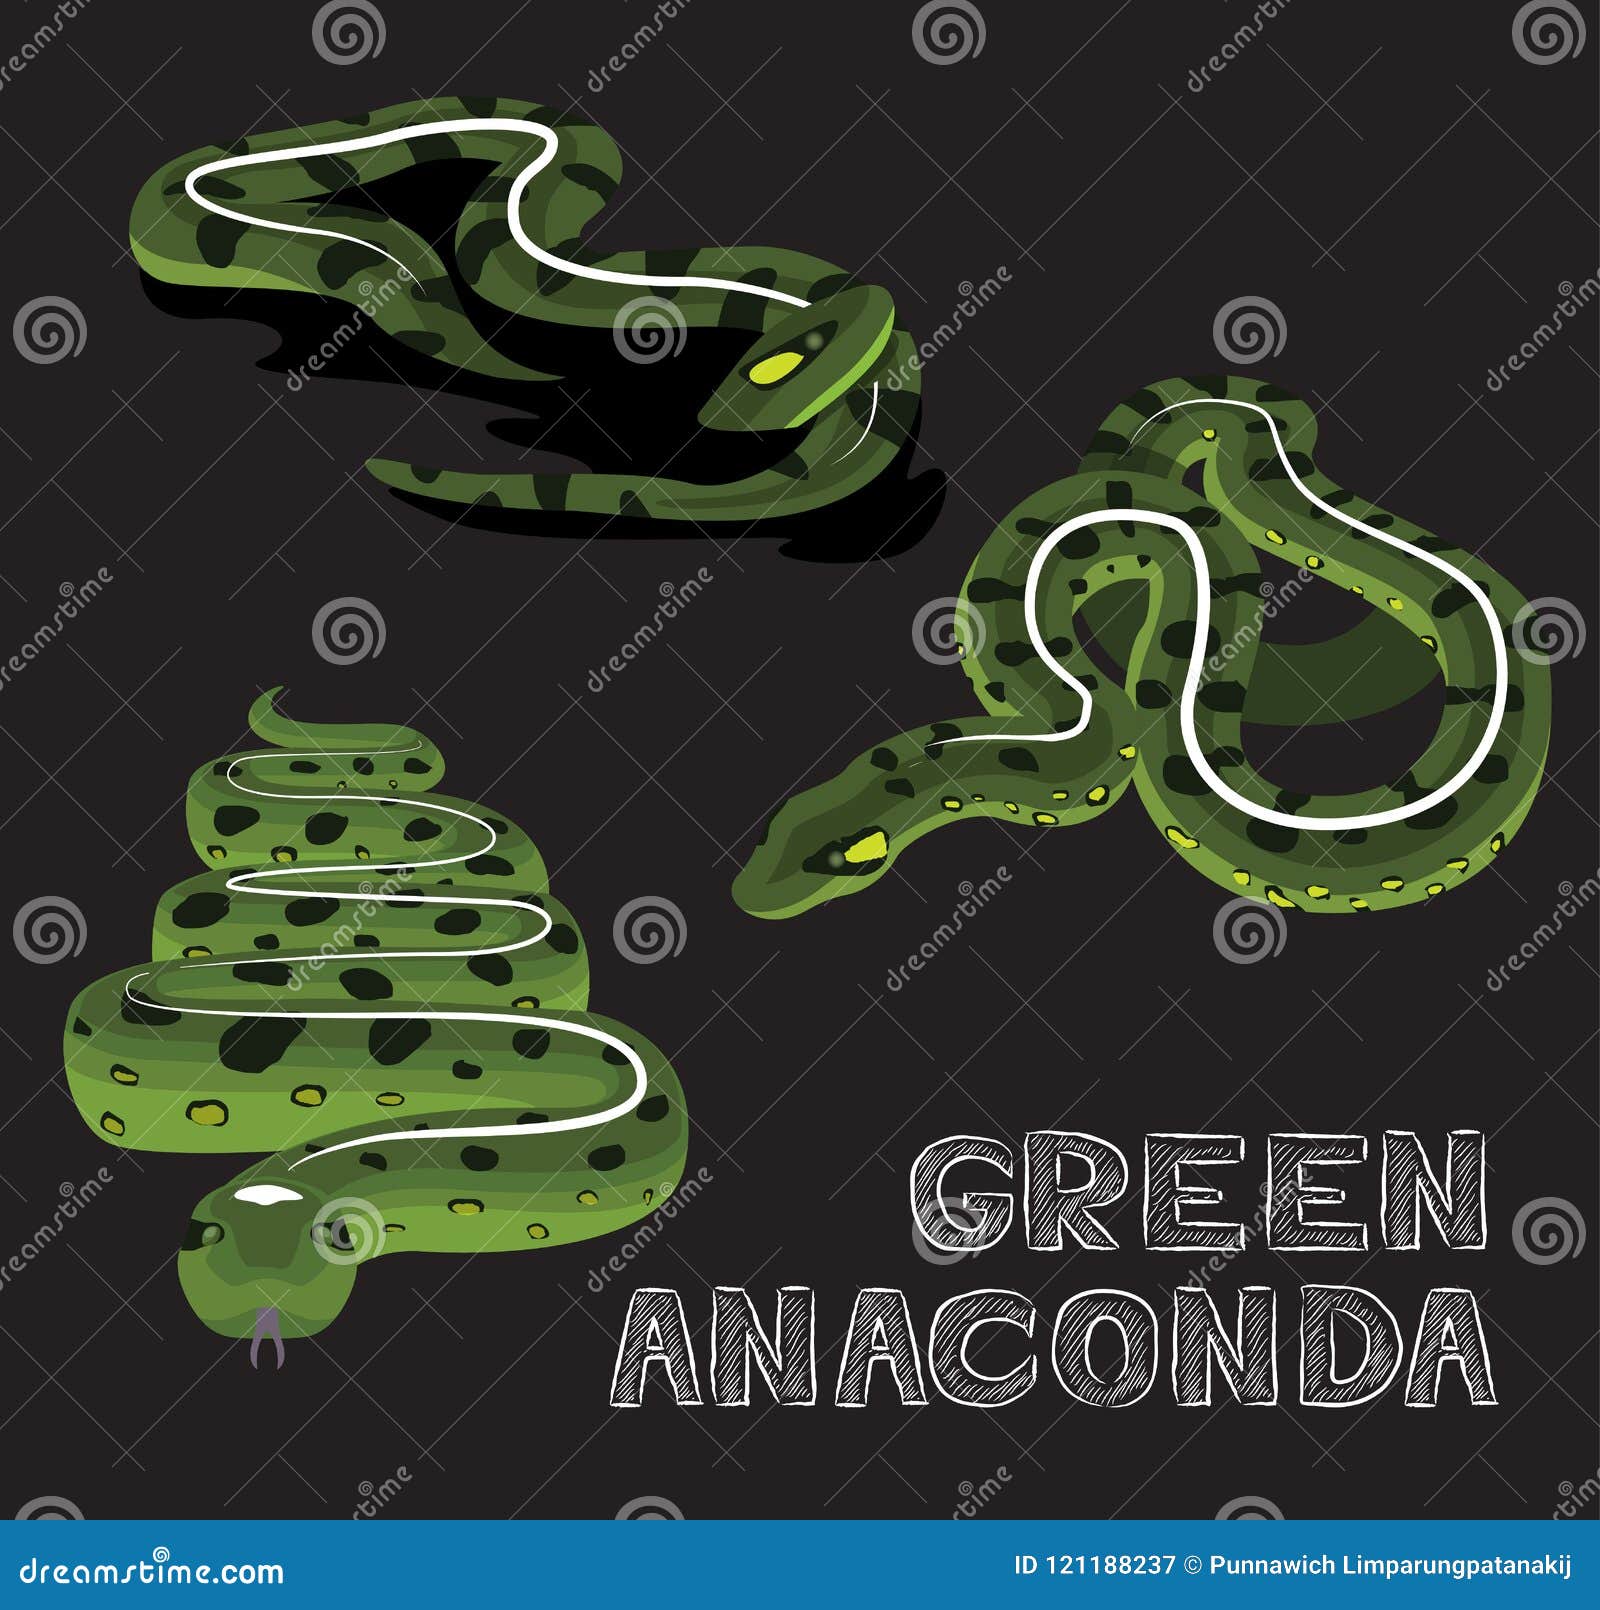 Snake Green Anaconda Cartoon Vector Illustration Stock Vector -  Illustration of snake, character: 121188237